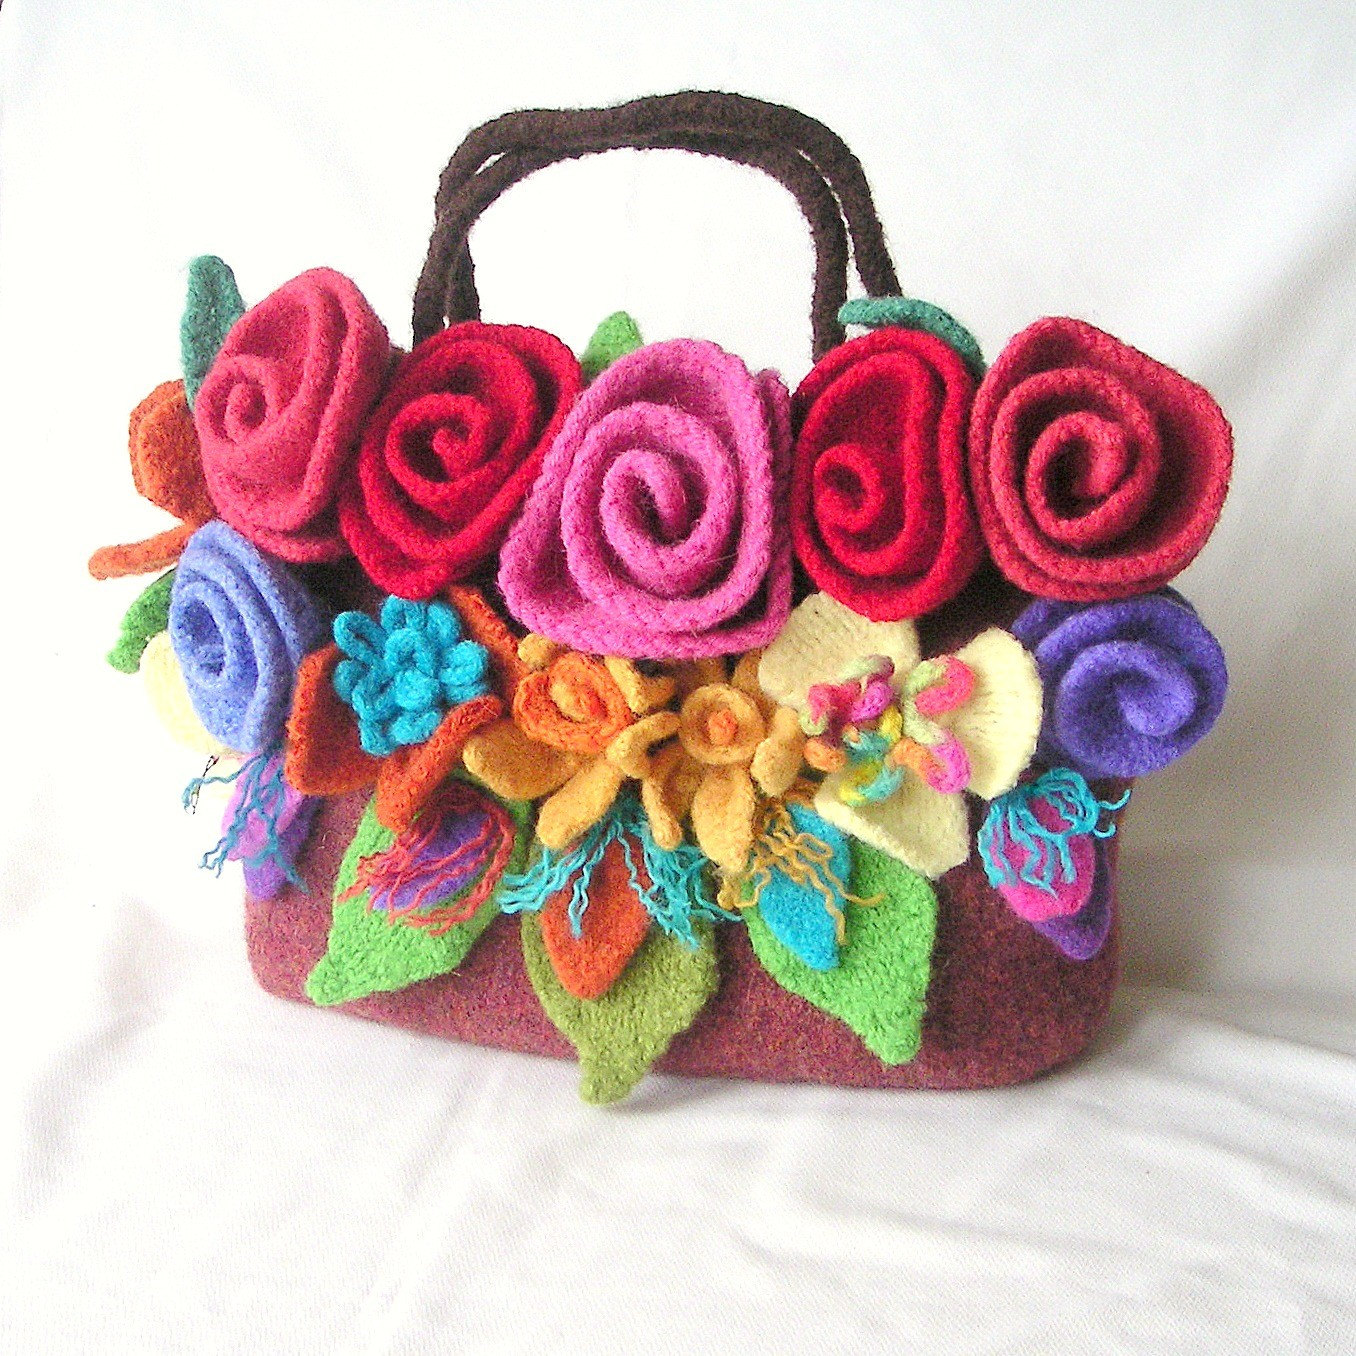 Jean Greenhowe : Crochet Patterns, Knitting Patterns, Hooks